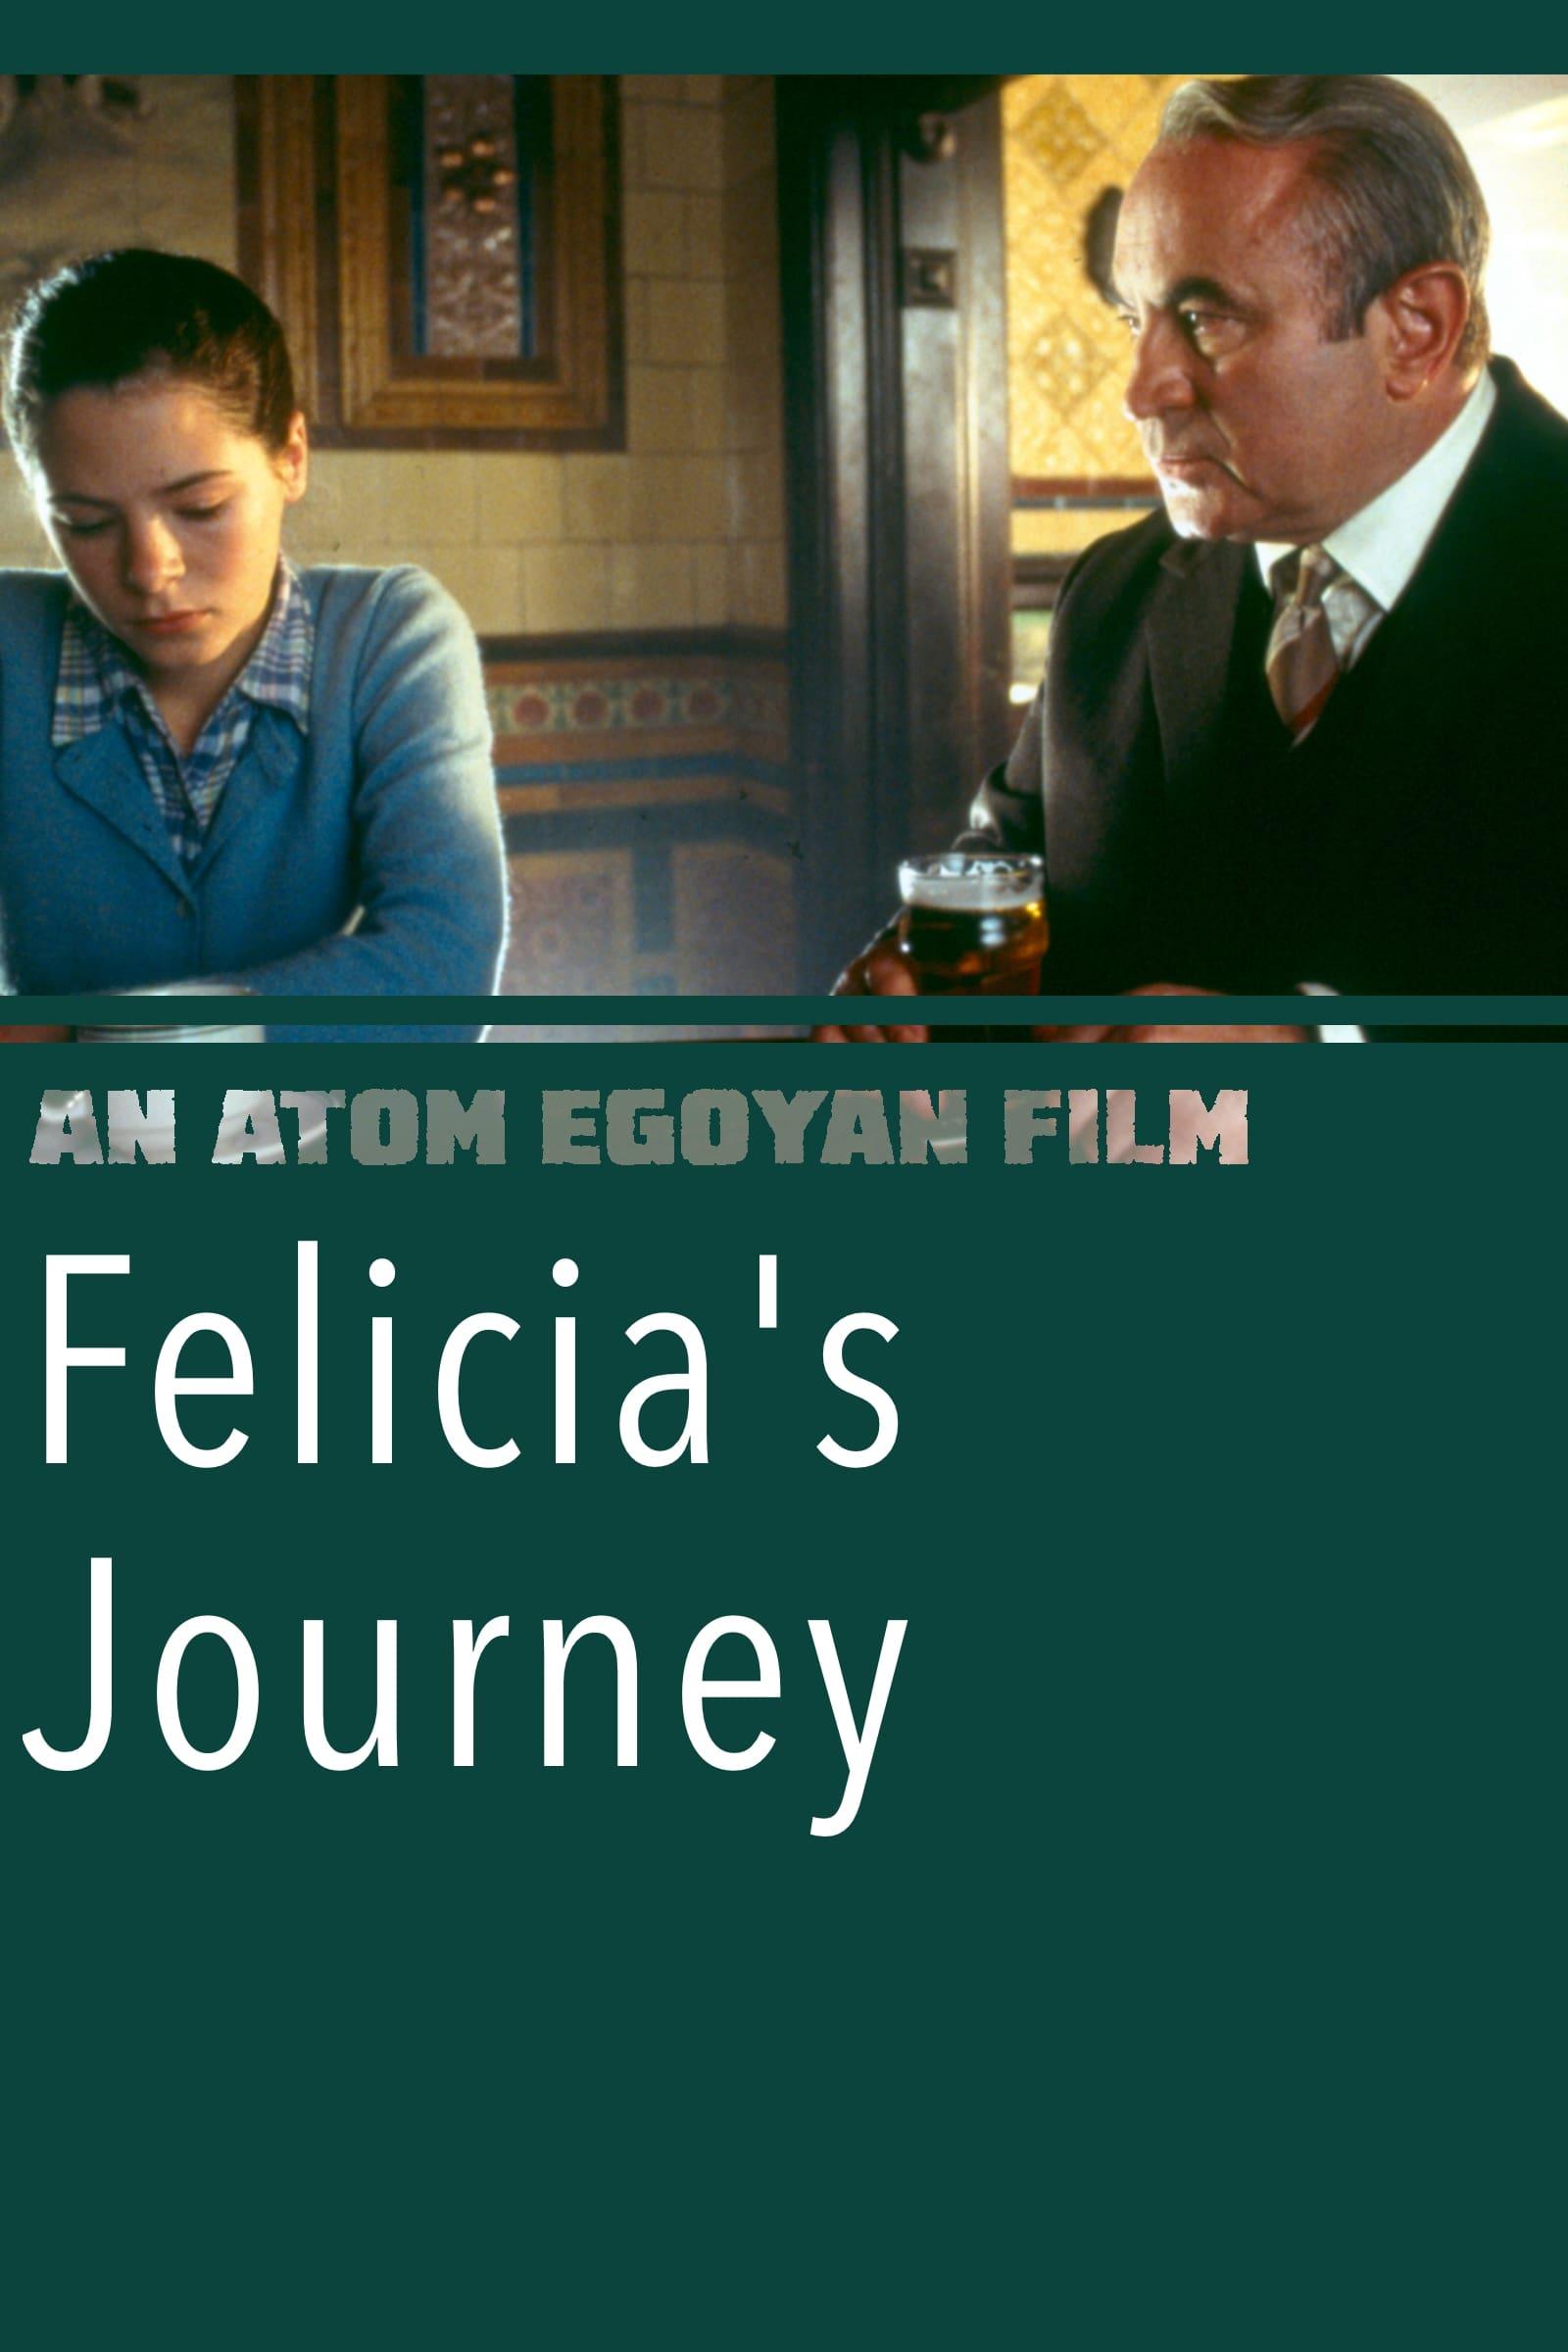 Felicia's Journey poster